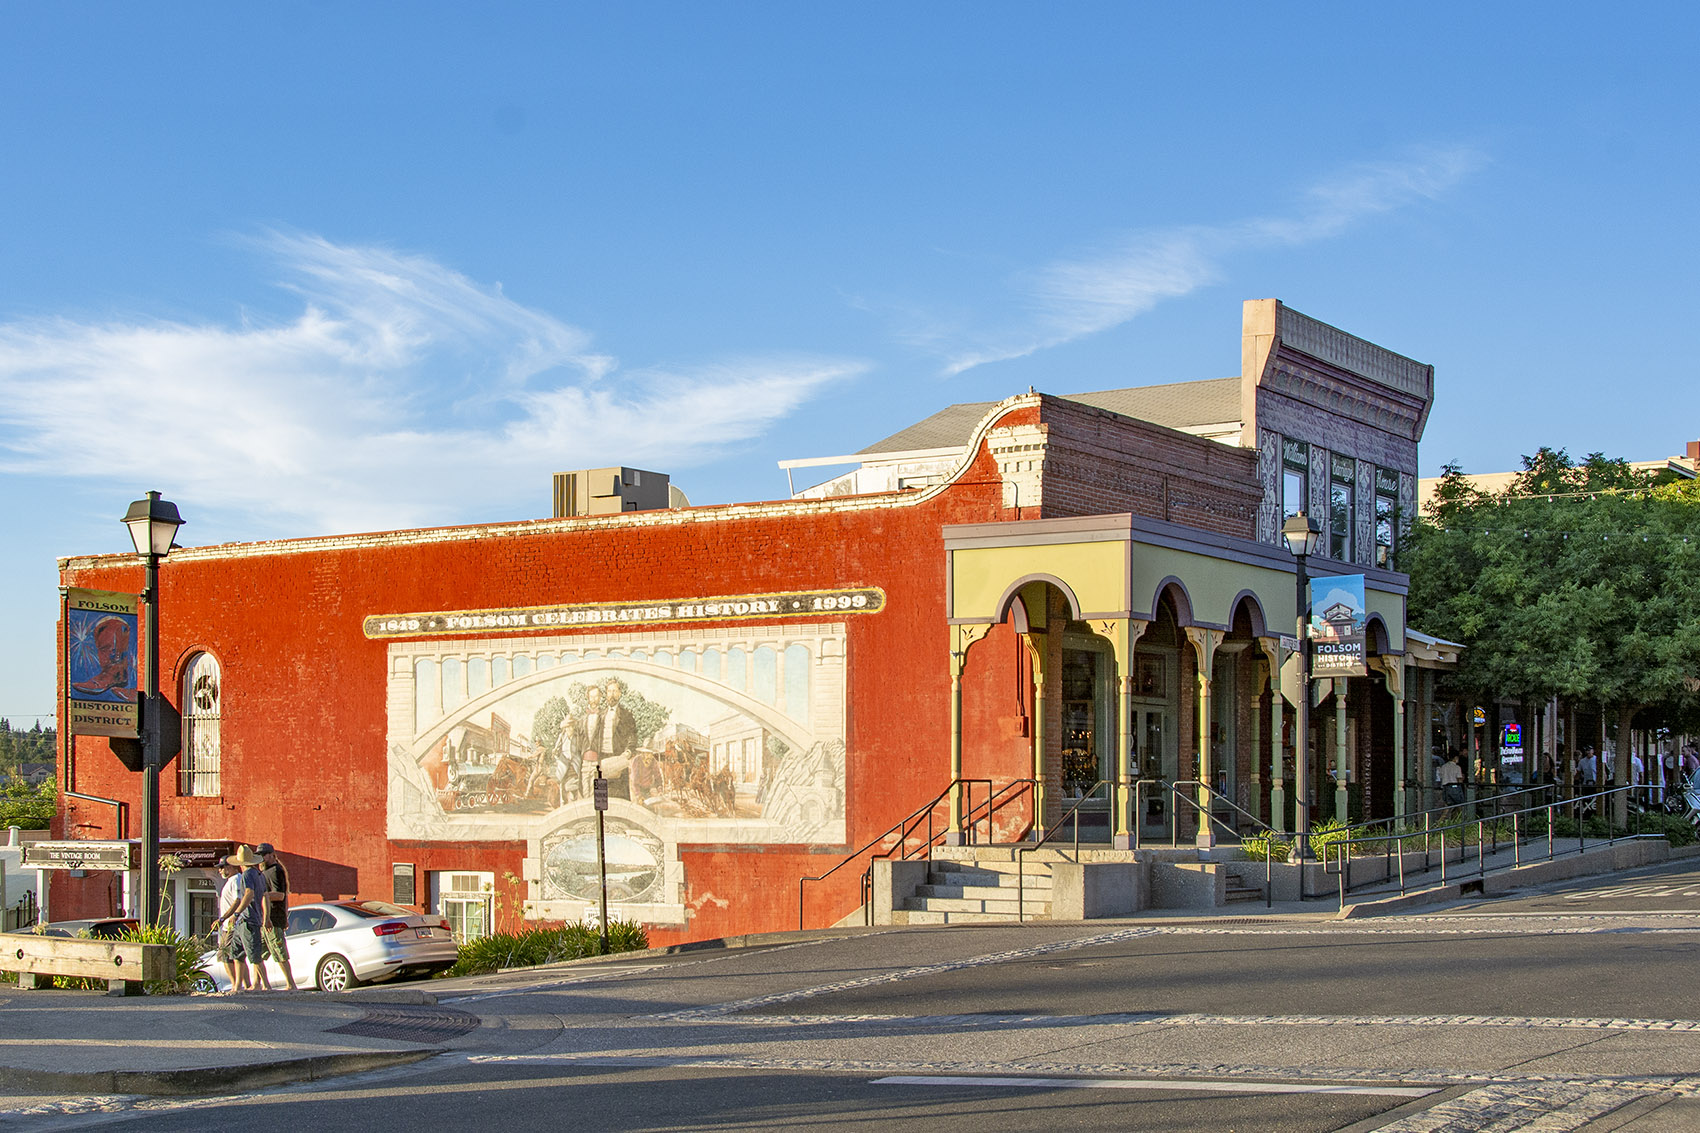 Folsom Historic District